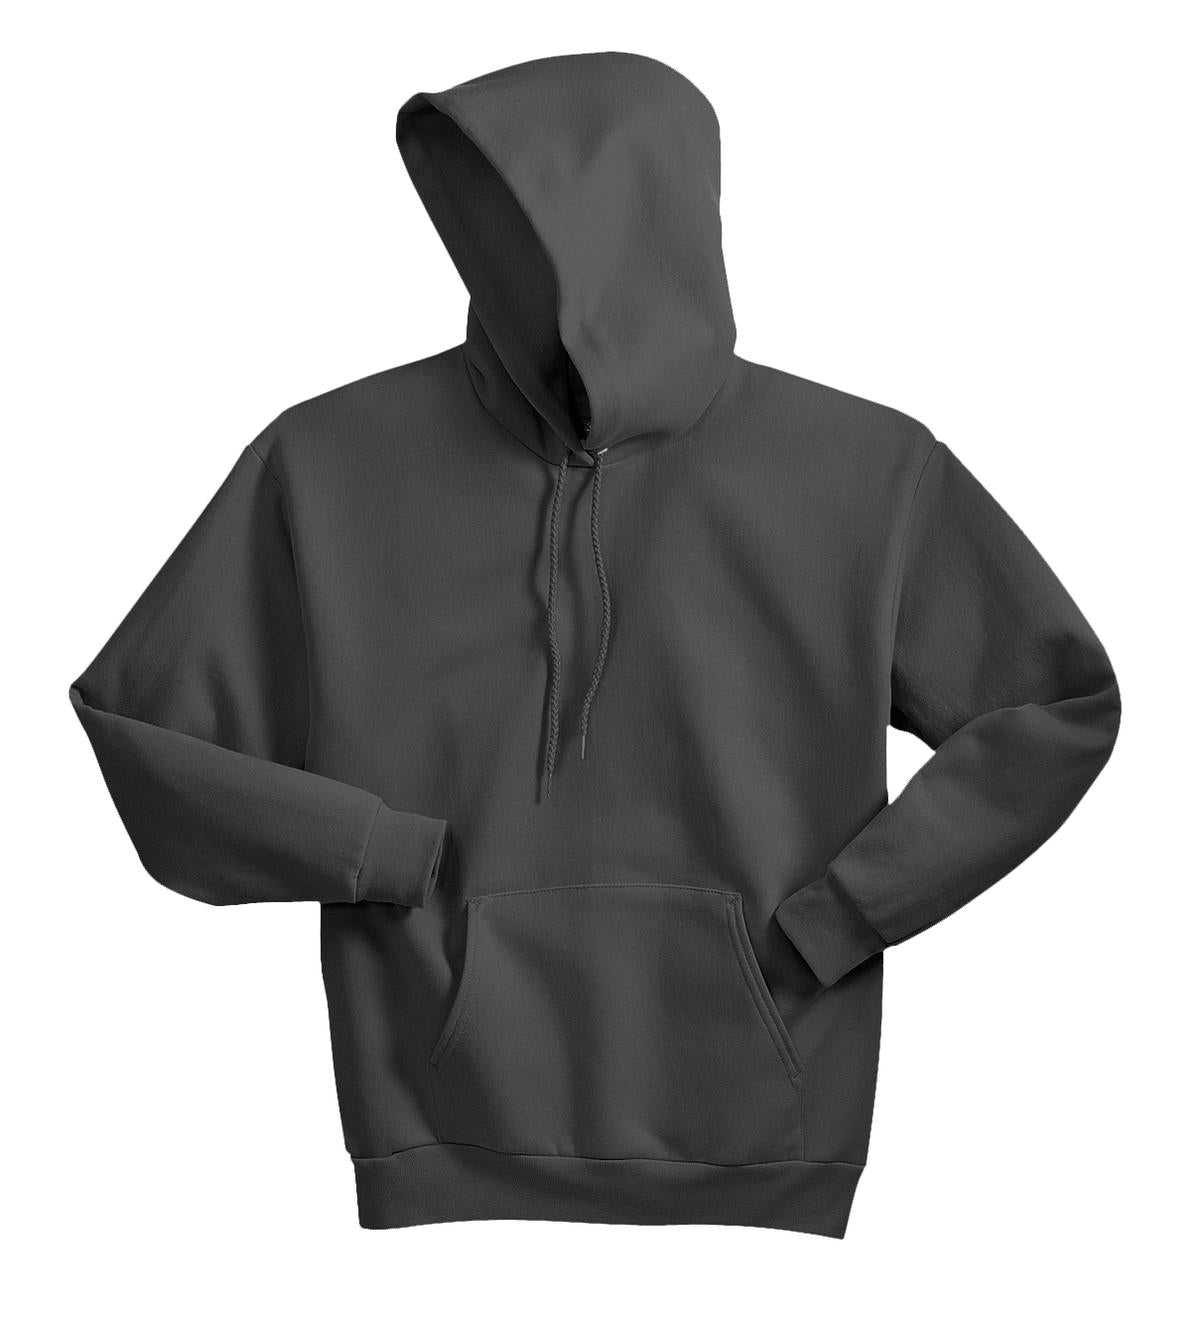 Hanes P170 EcoSmart - Pullover Hooded Sweatshirt - Smoke Gray - HIT a Double